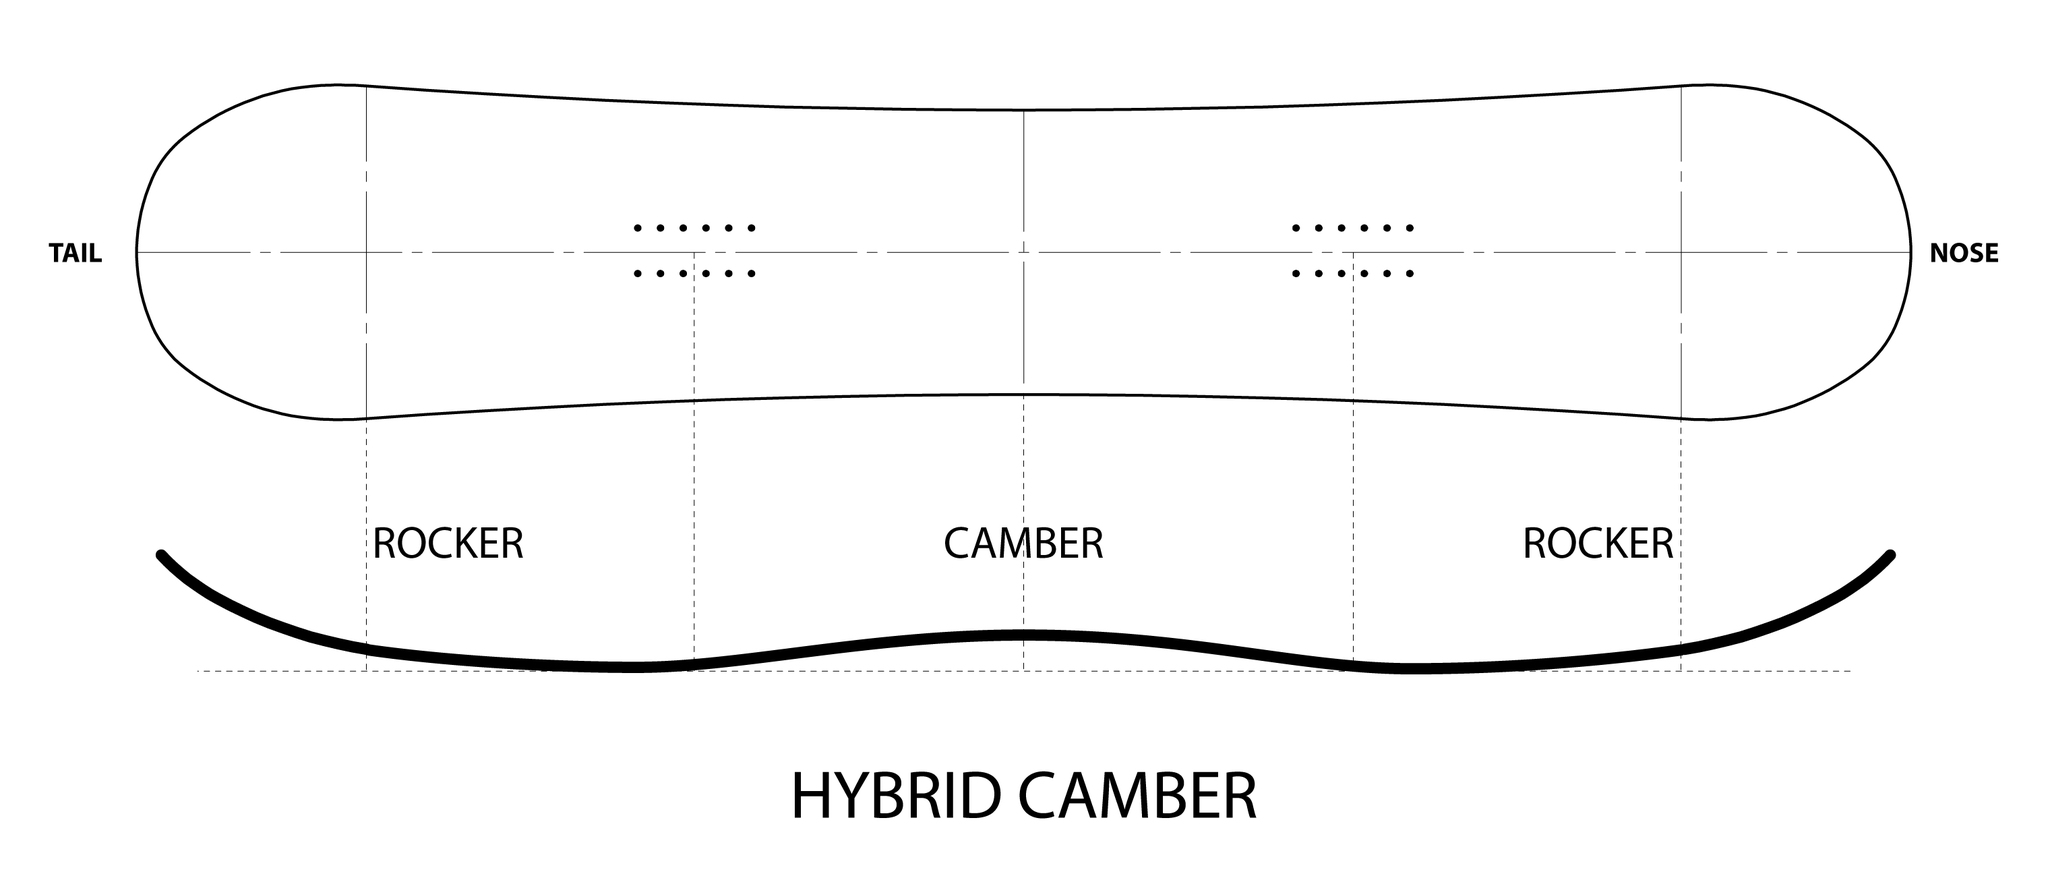 Afstudeeralbum Molester expositie Camber Profiles: Camber vs Rocker vs Flat vs Hybrids | BOARDWORLD Forums |  Australia's Premier Boardsports Community